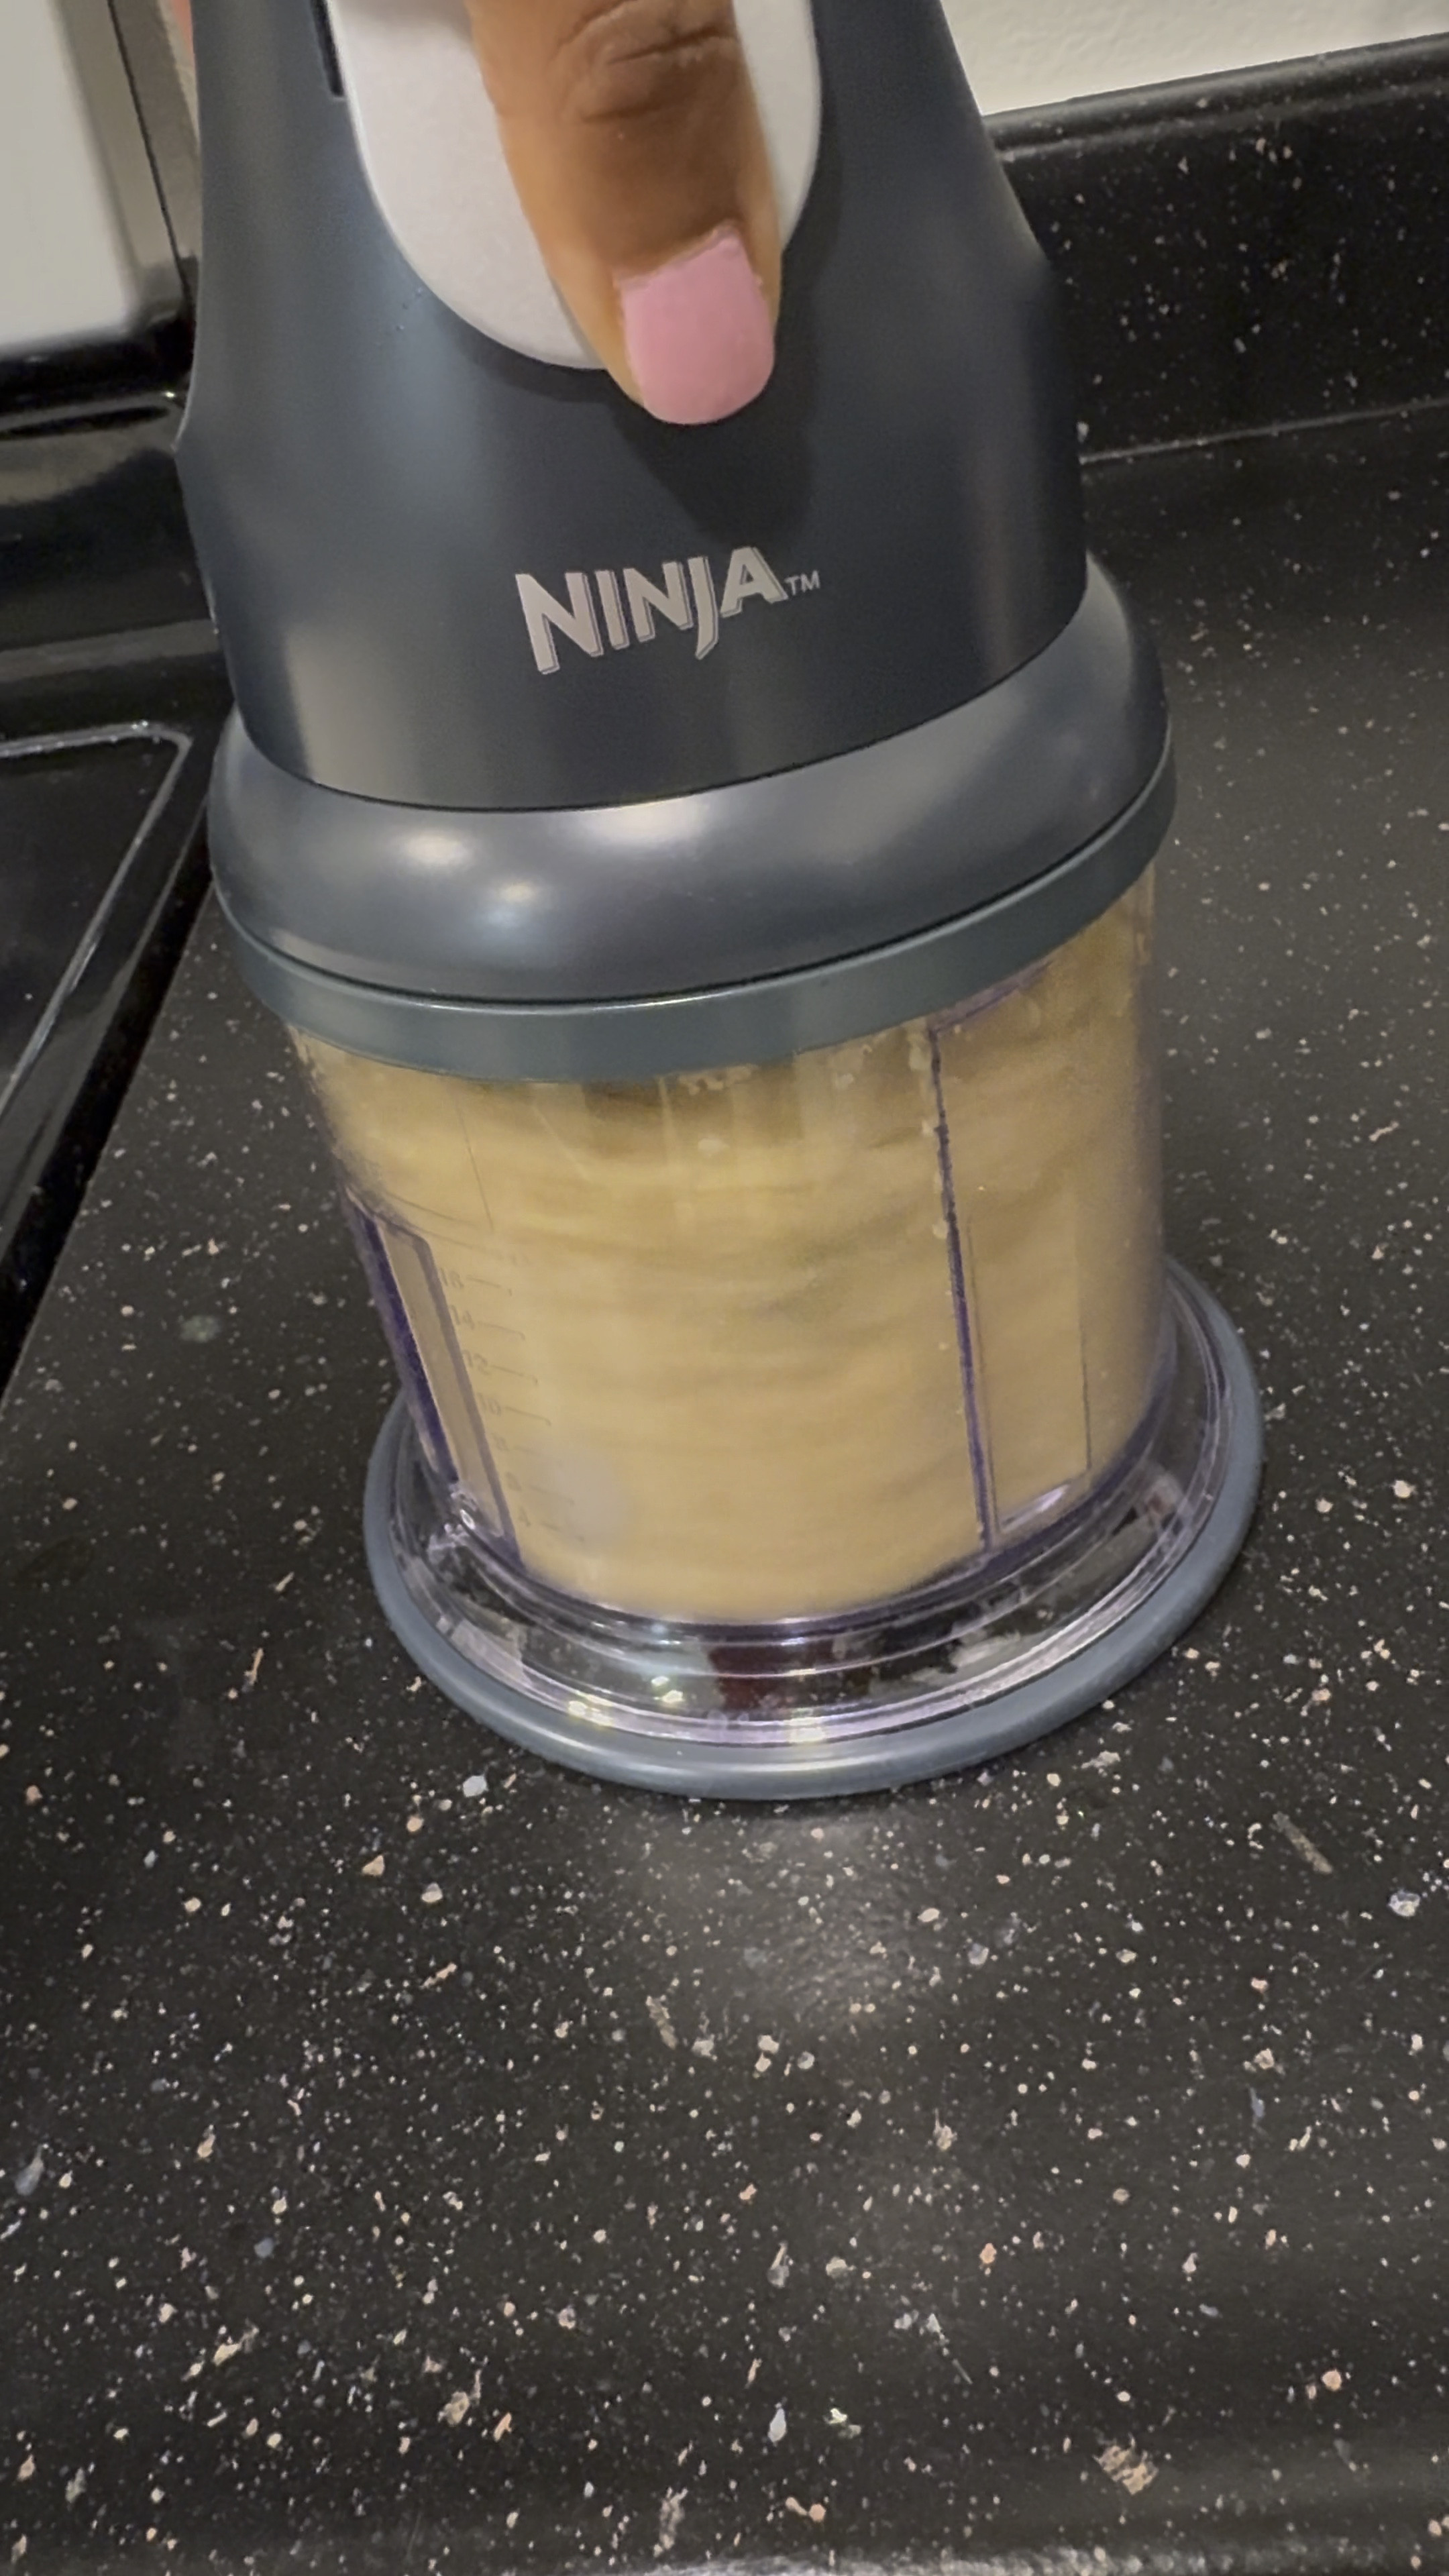 Ninja NJ100GR 16.0 Oz. Food Chopper ,Food Processor - Gray for